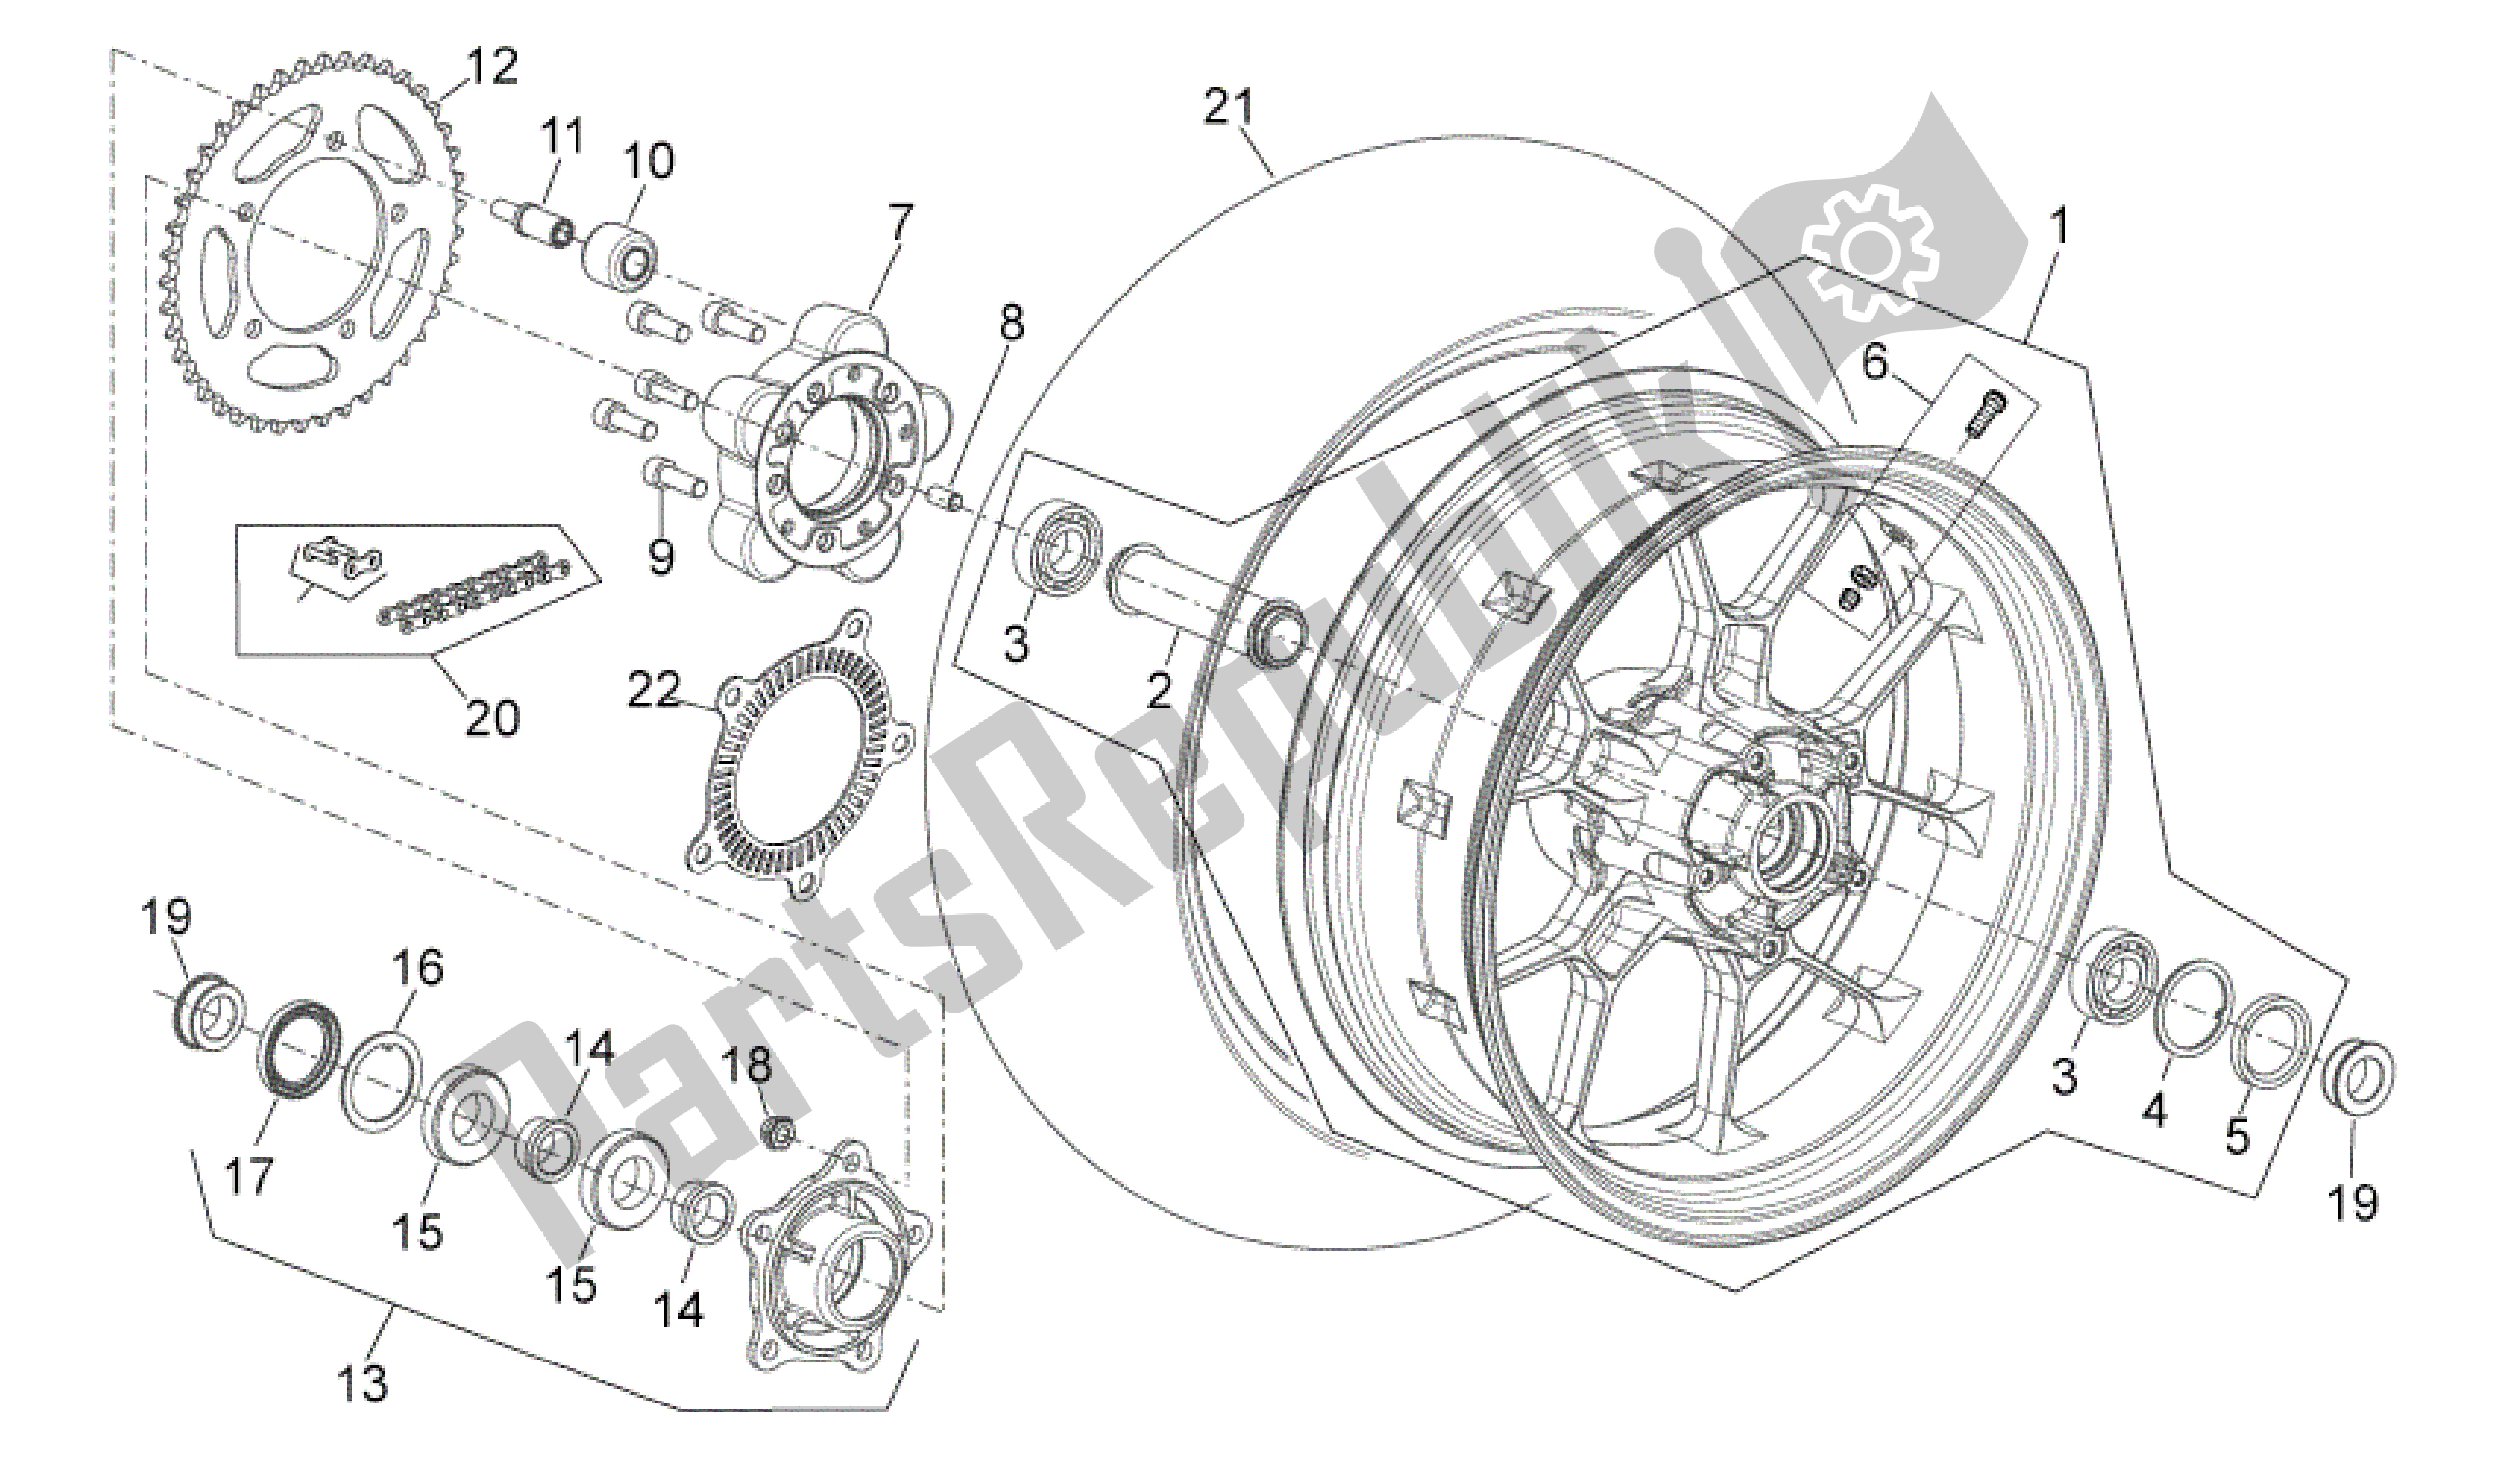 All parts for the Rear Wheel of the Aprilia Mana 850 2009 - 2011